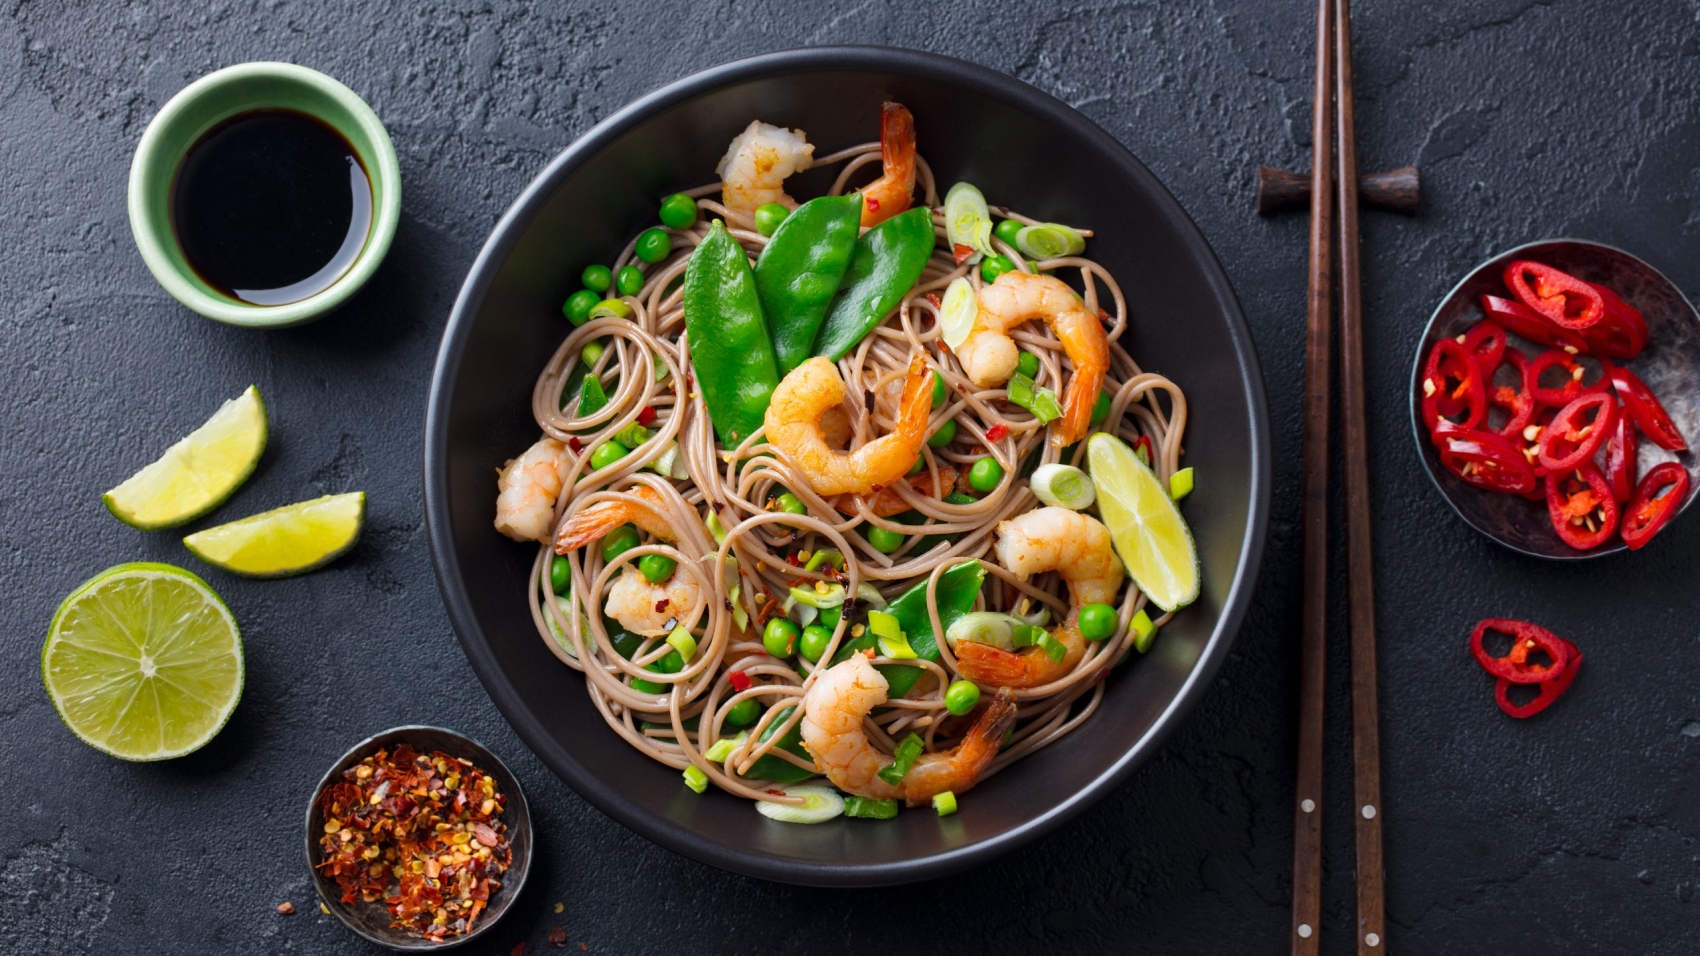 stir-fry-noodles-with-vegetables-and-shrimps-in-bl-2021-08-26-16-29-54-utc